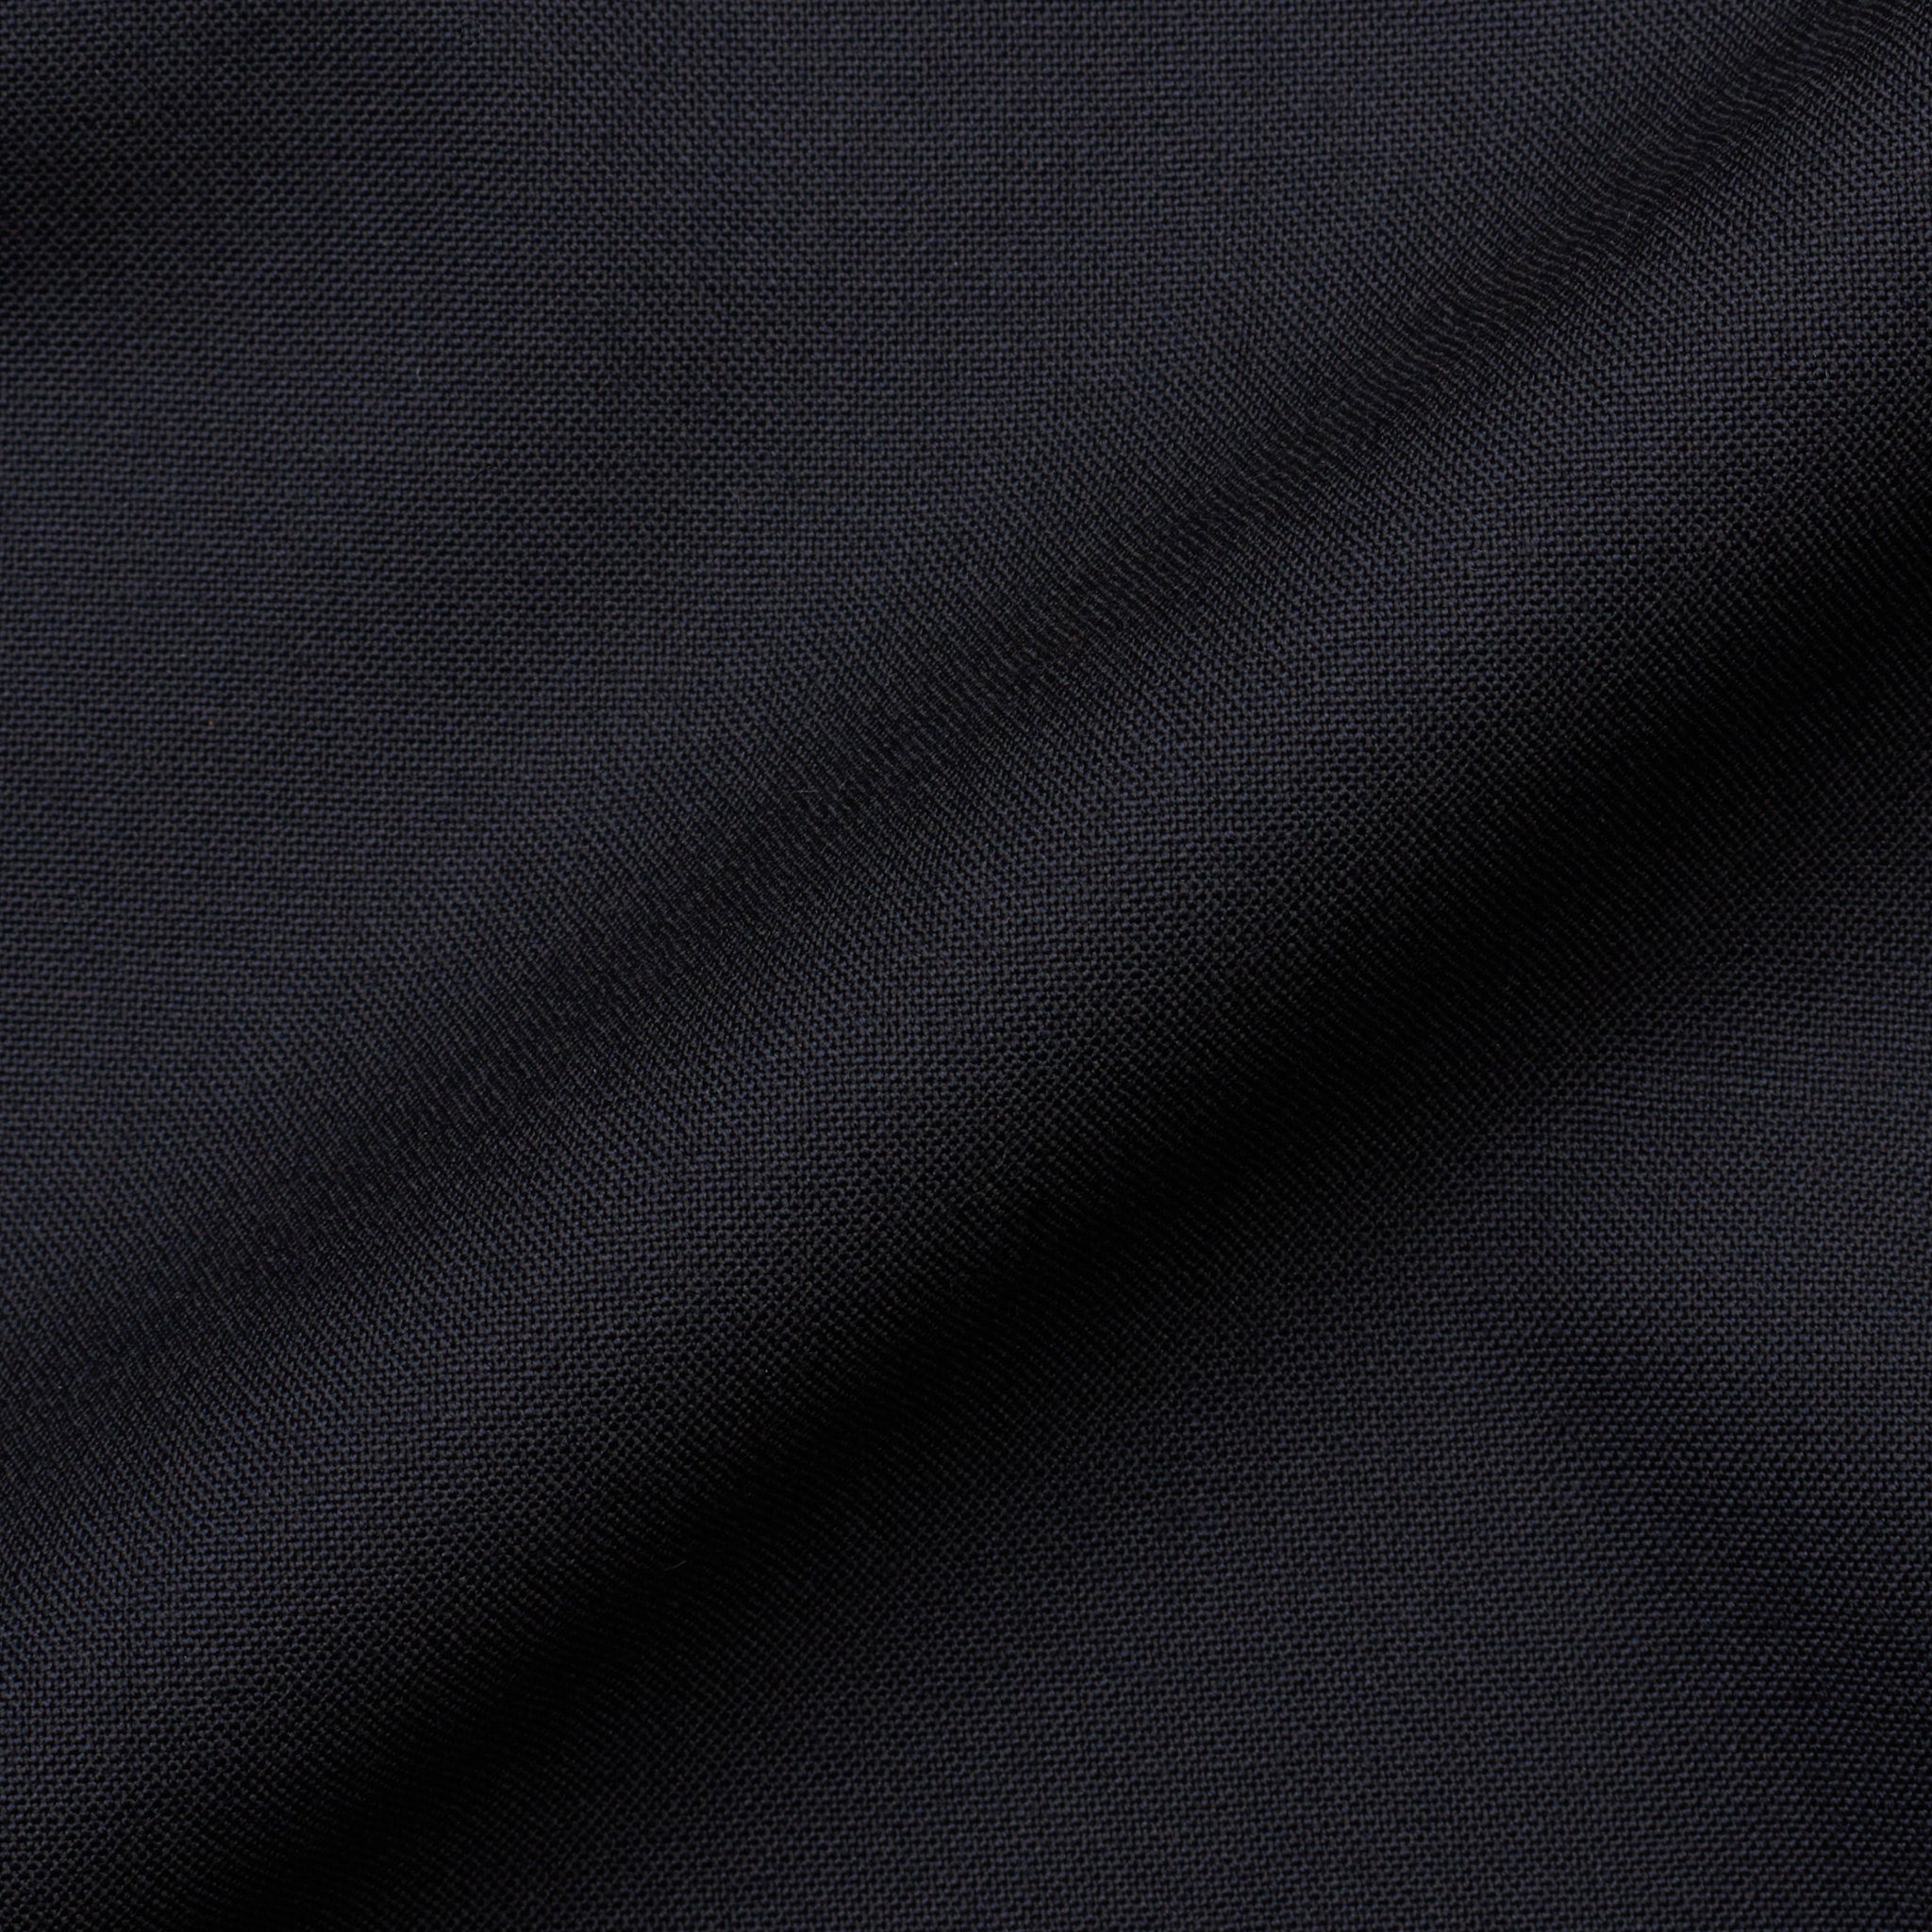 BRIONI "BRUNICO" Handmade Midnight Blue Wool Jacket NEW BRIONI